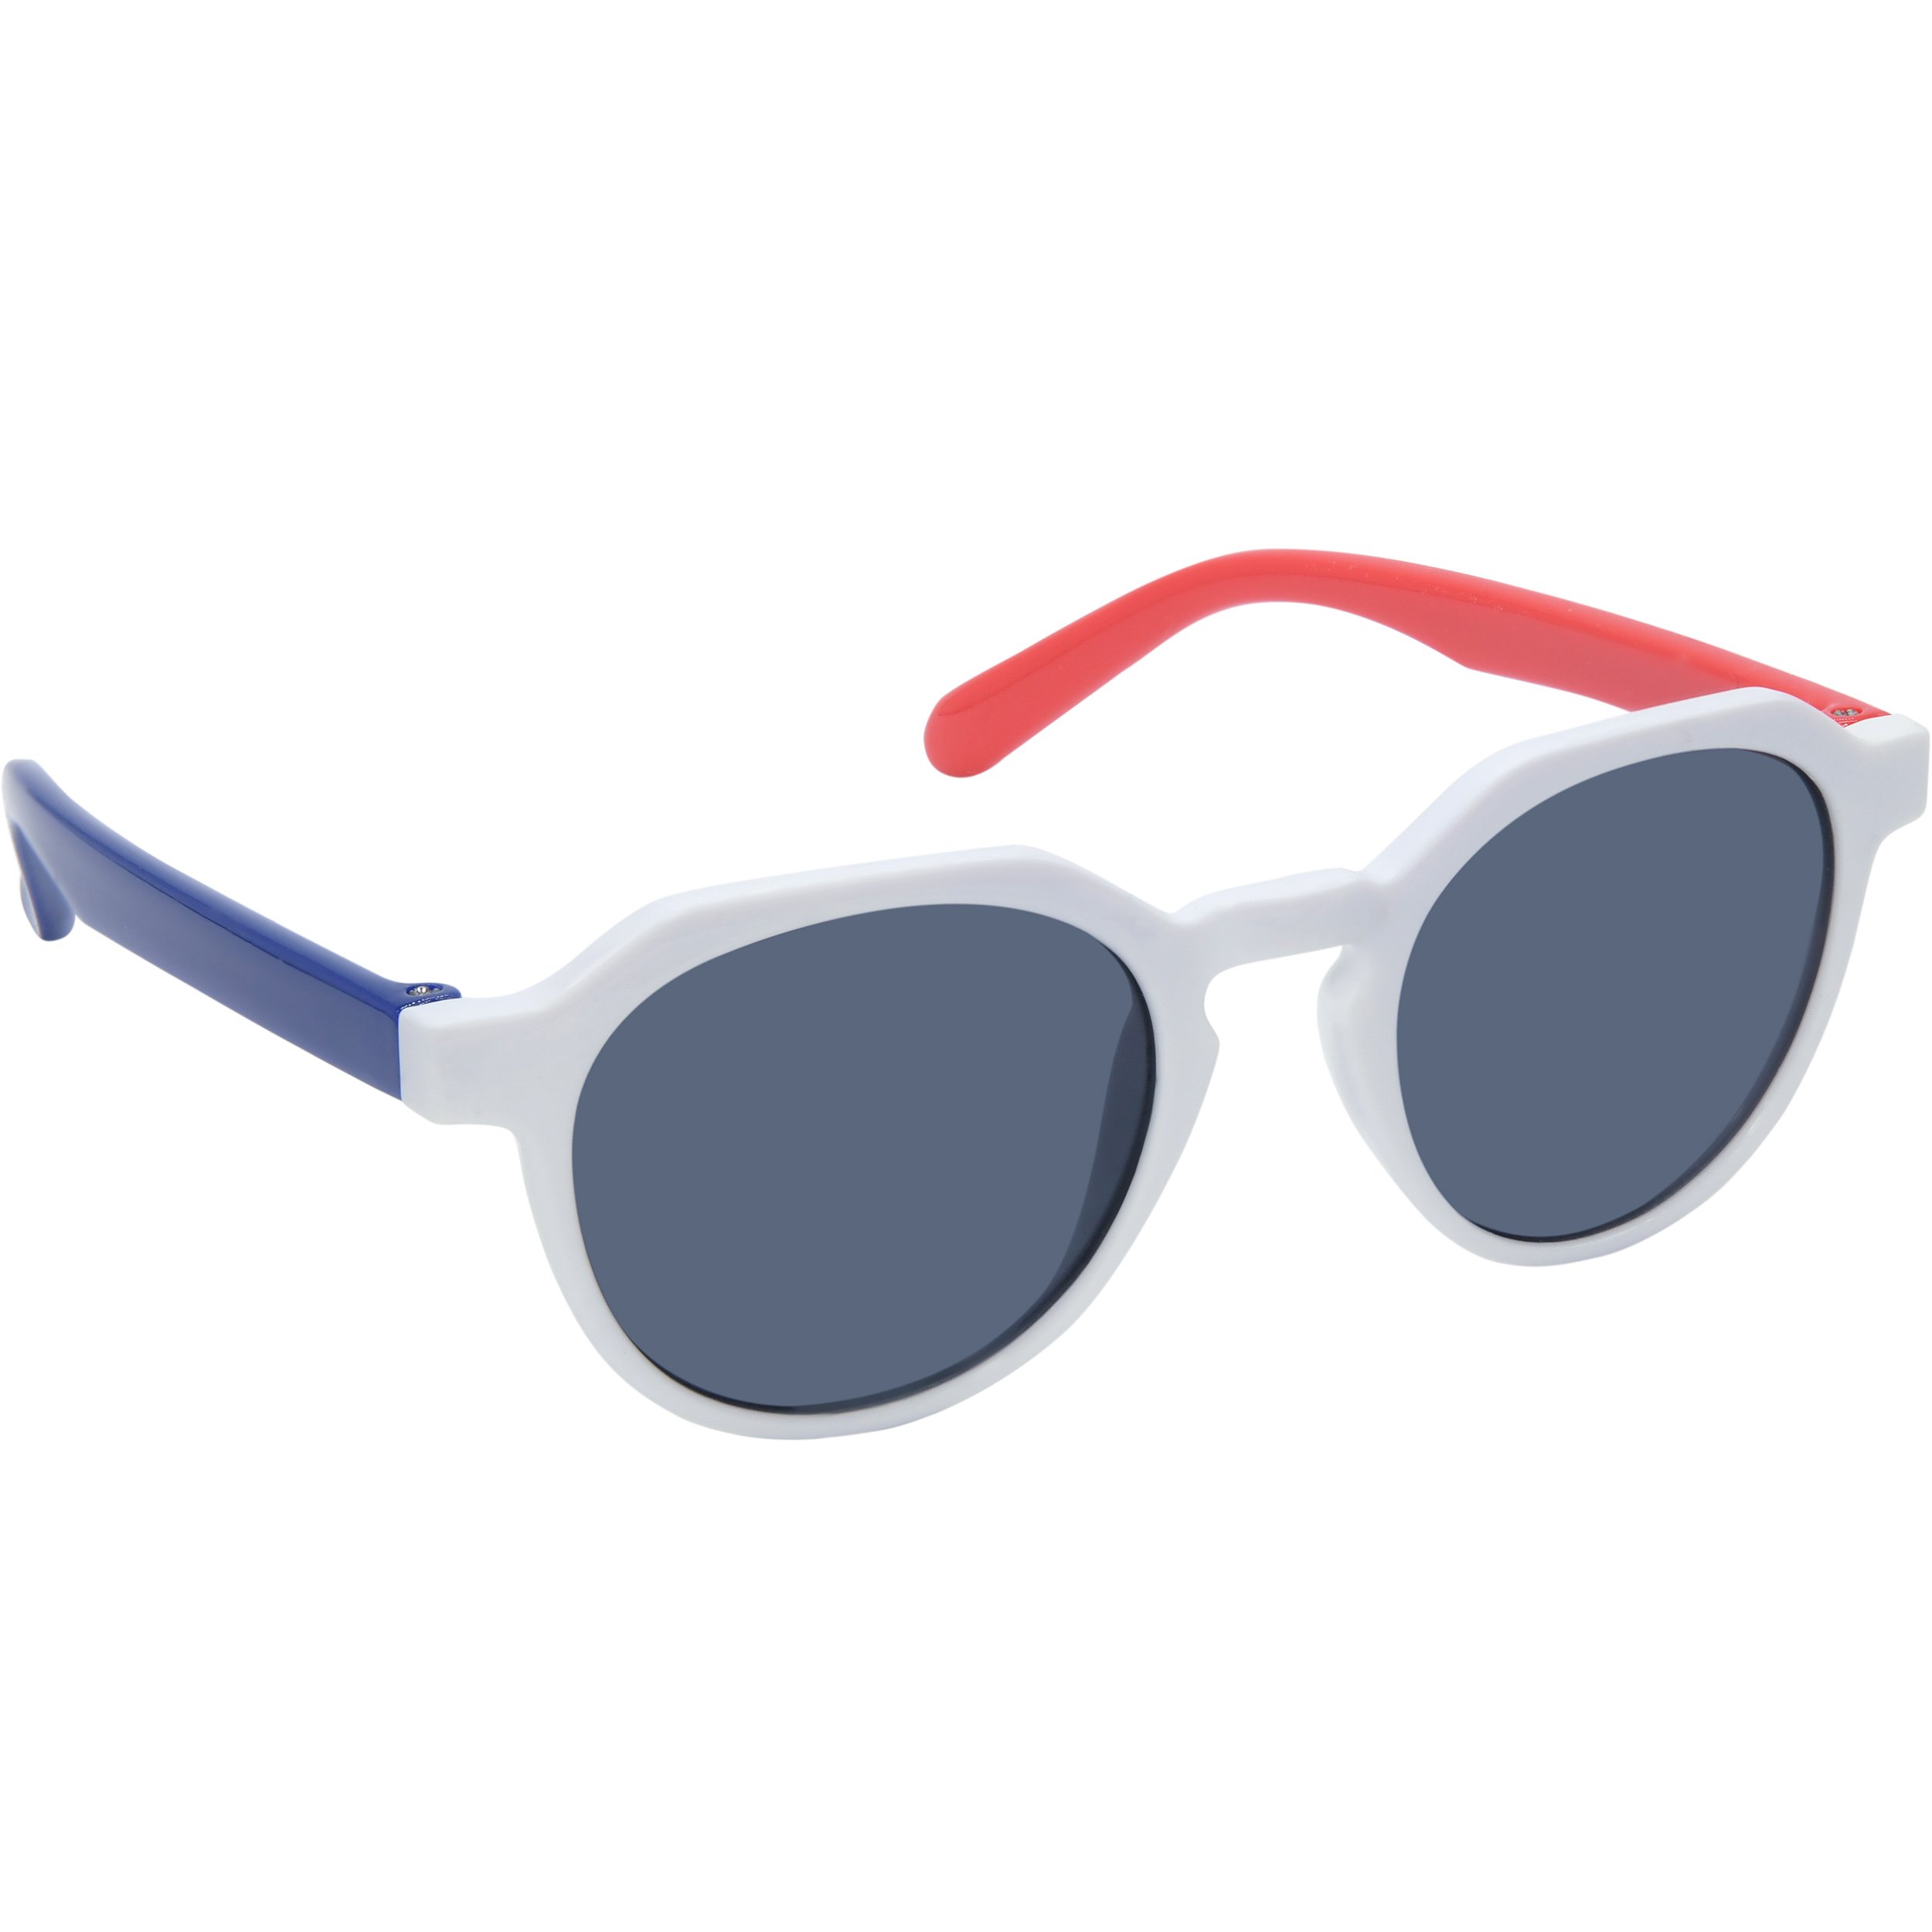 Eyelead Polarized Kids's Sunglasses 2 - 5 Years Γυαλιά Ηλίου Παιδικά 1 Τεμάχιο, Κωδ Κ1088 - Λευκό / Μπλε / Κόκκινο